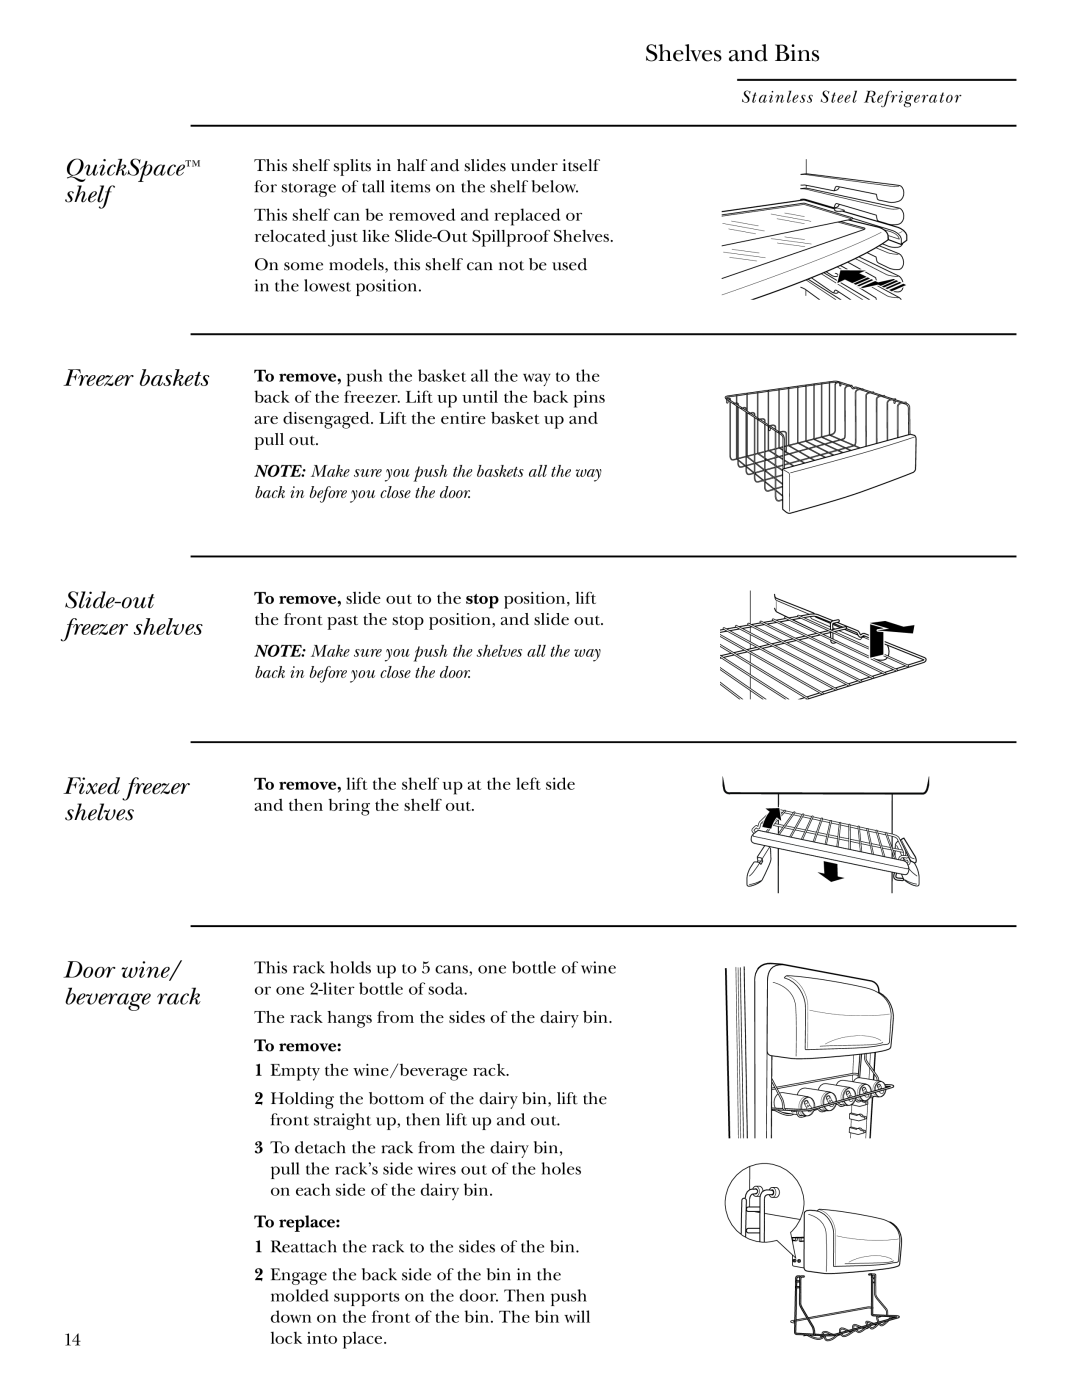 GE Monogram Refrigerator owner manual QuickSpace shelf, Freezer baskets, Slide-out freezer shelves, Fixed freezer shelves 